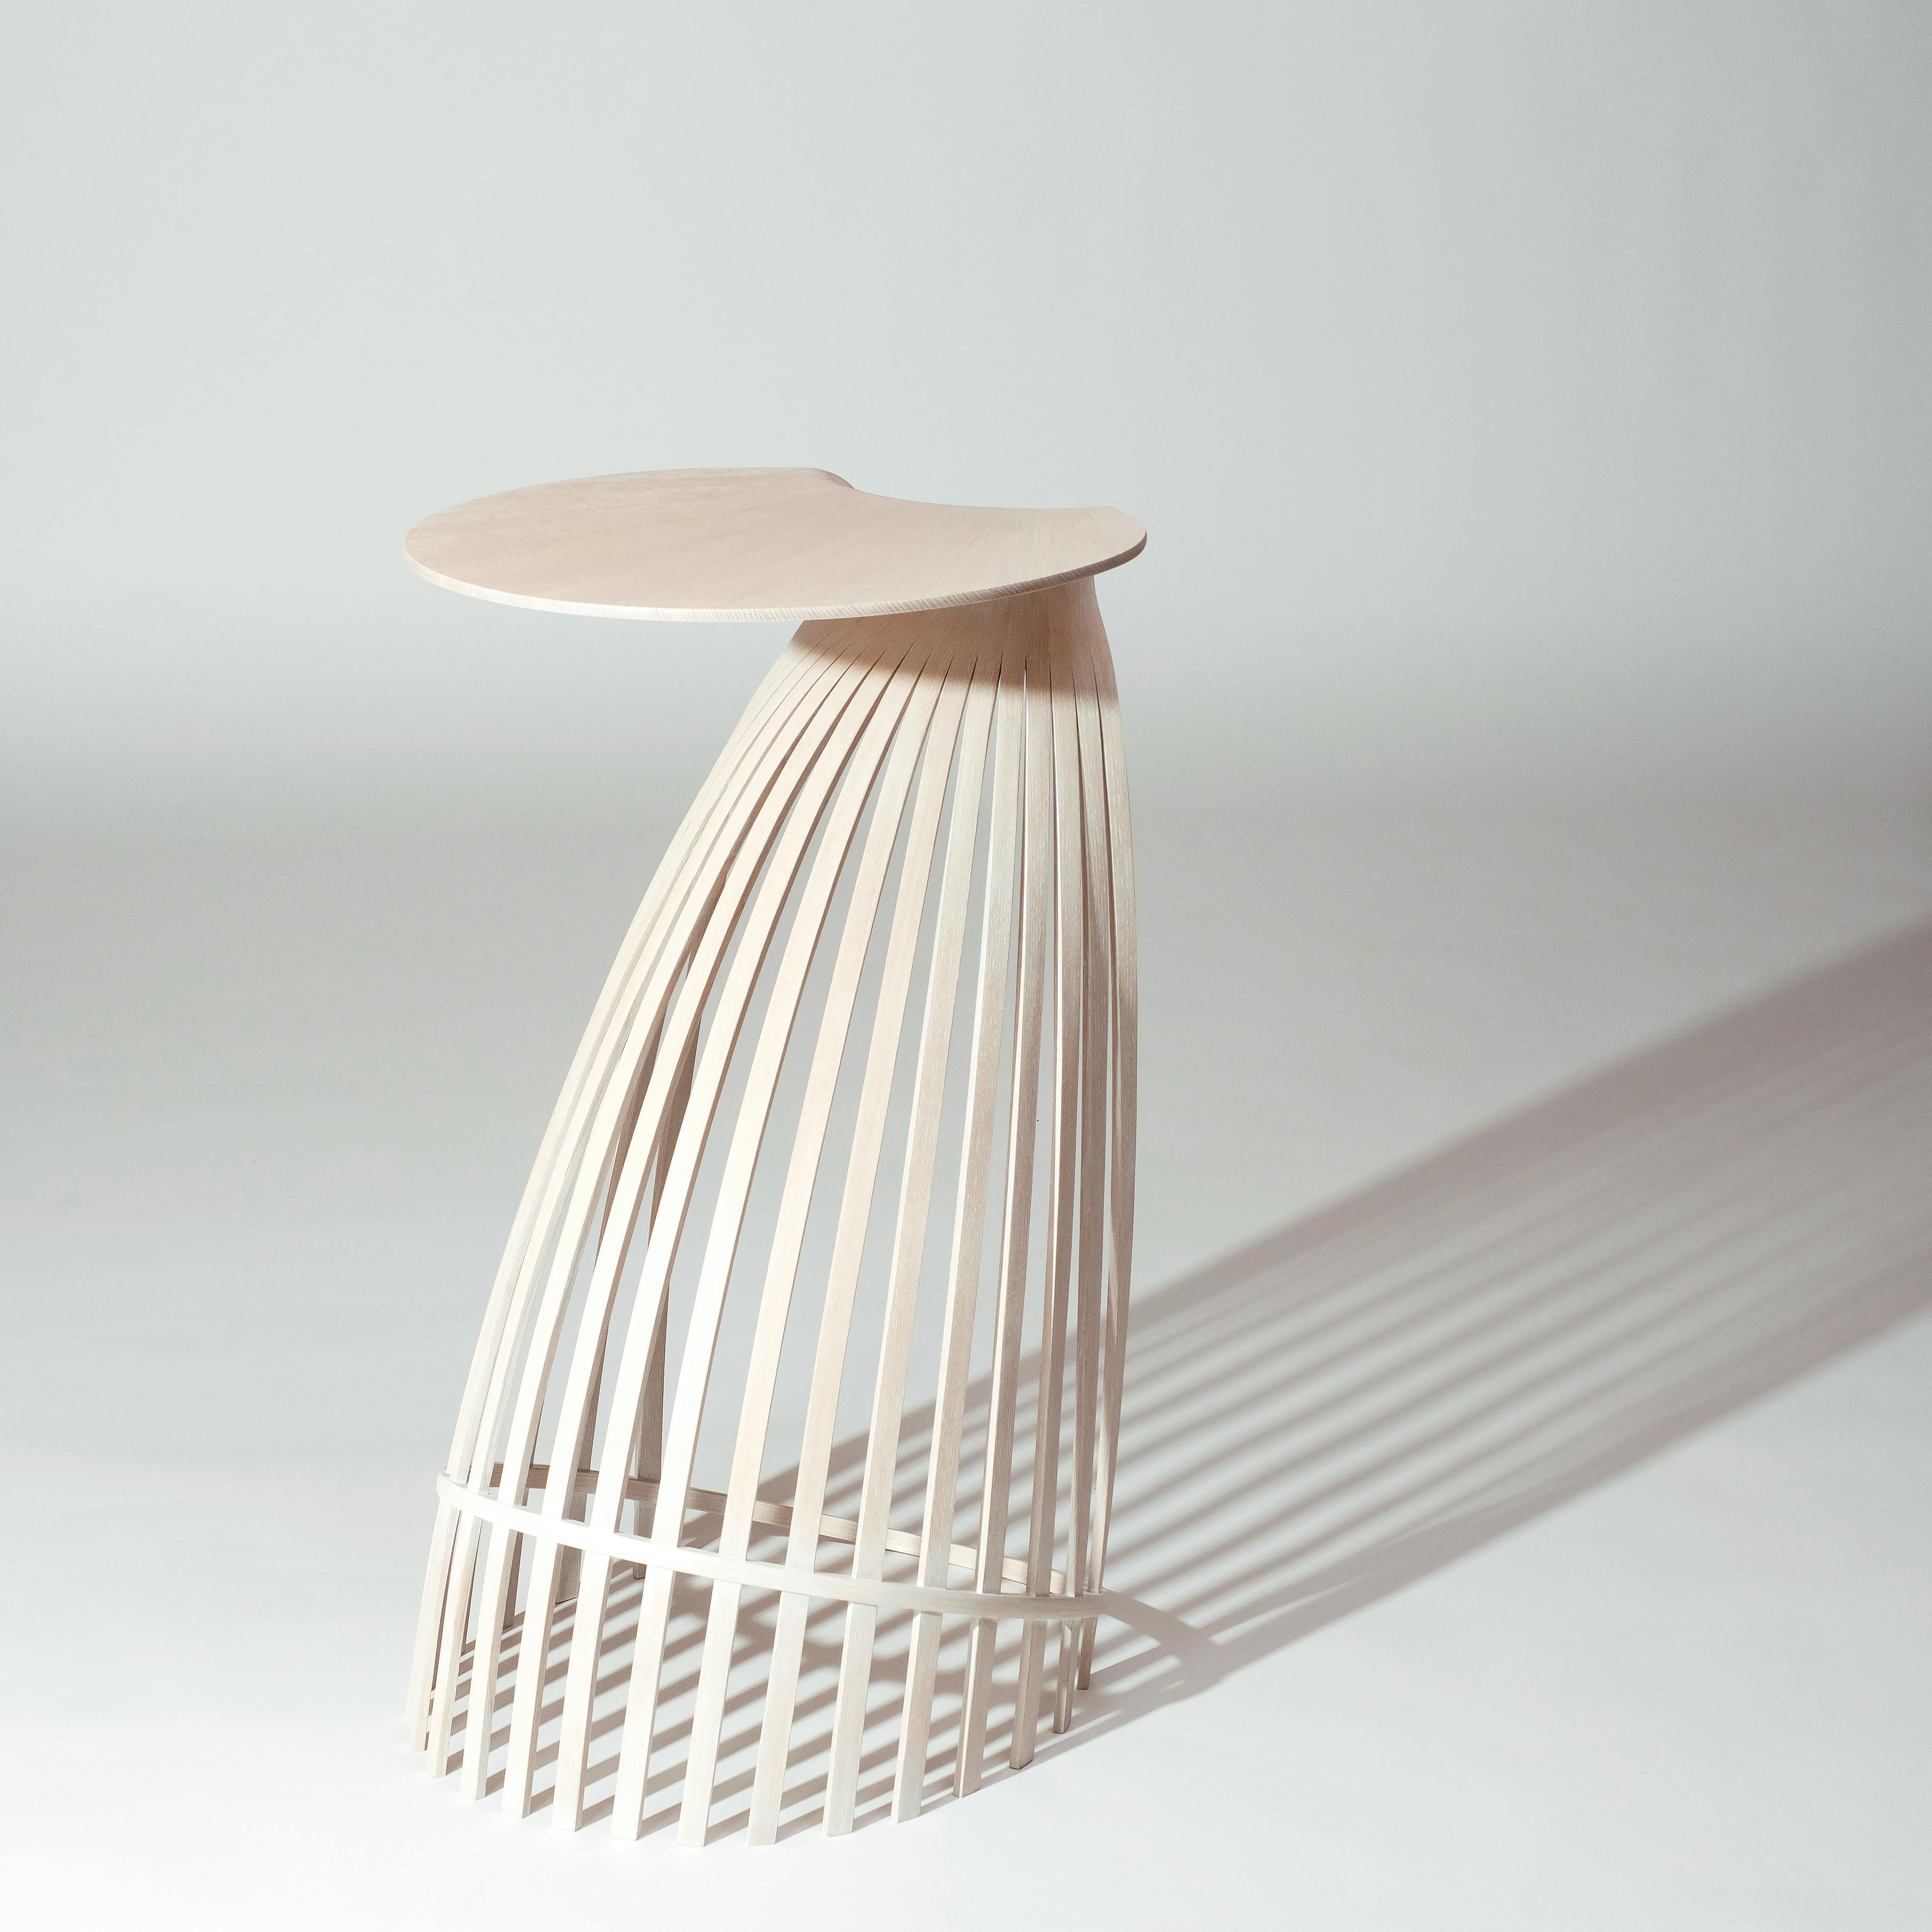 bent wood side table with glass top by Yuri Kobayashi